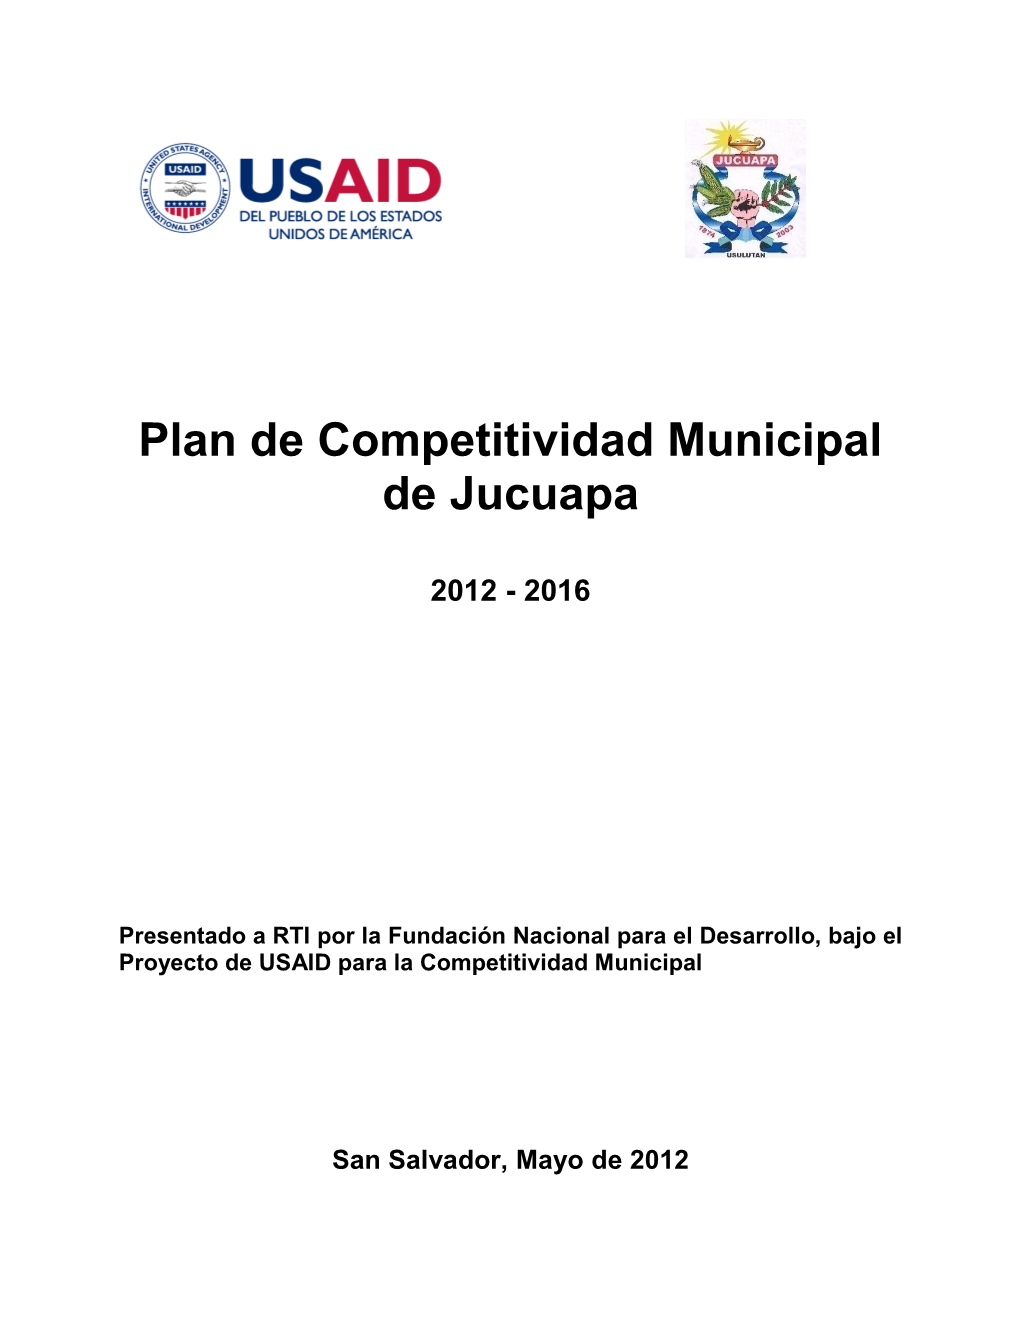 Proyecto USAID Para La Competitividad Municipal